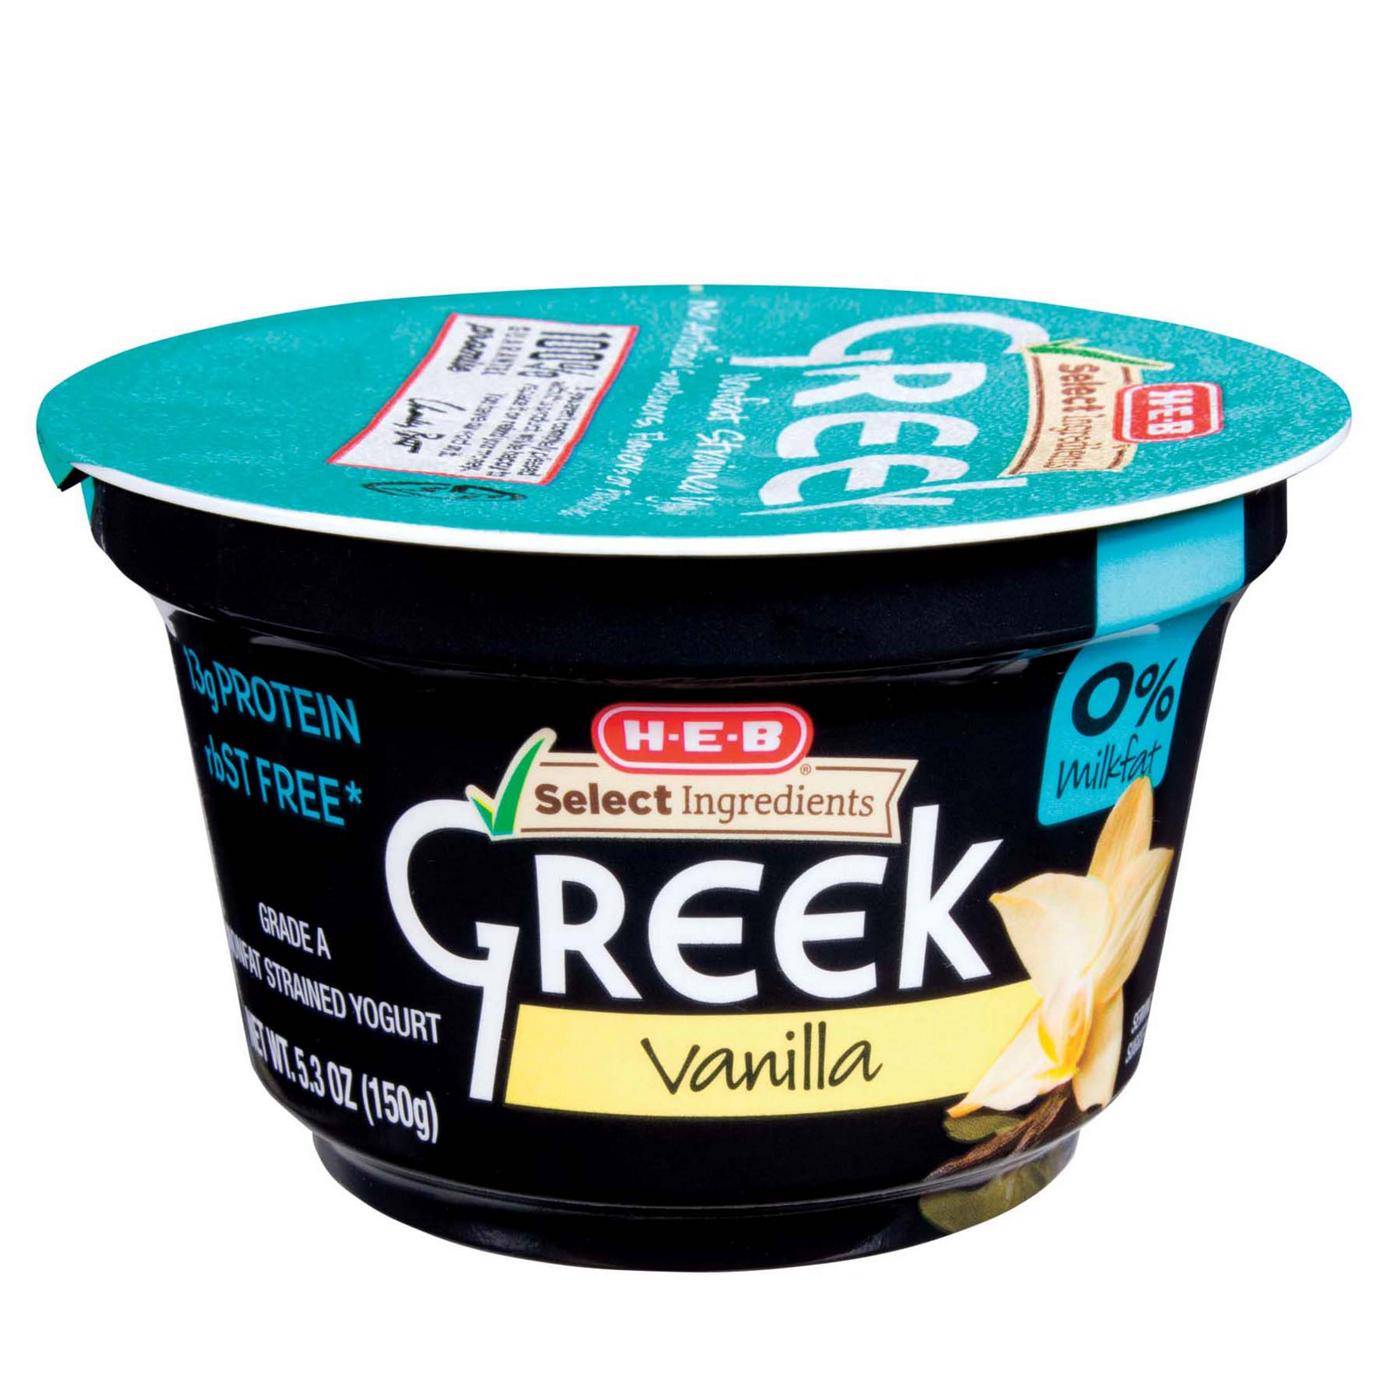 H-E-B Non-Fat Vanilla Greek Yogurt; image 1 of 2